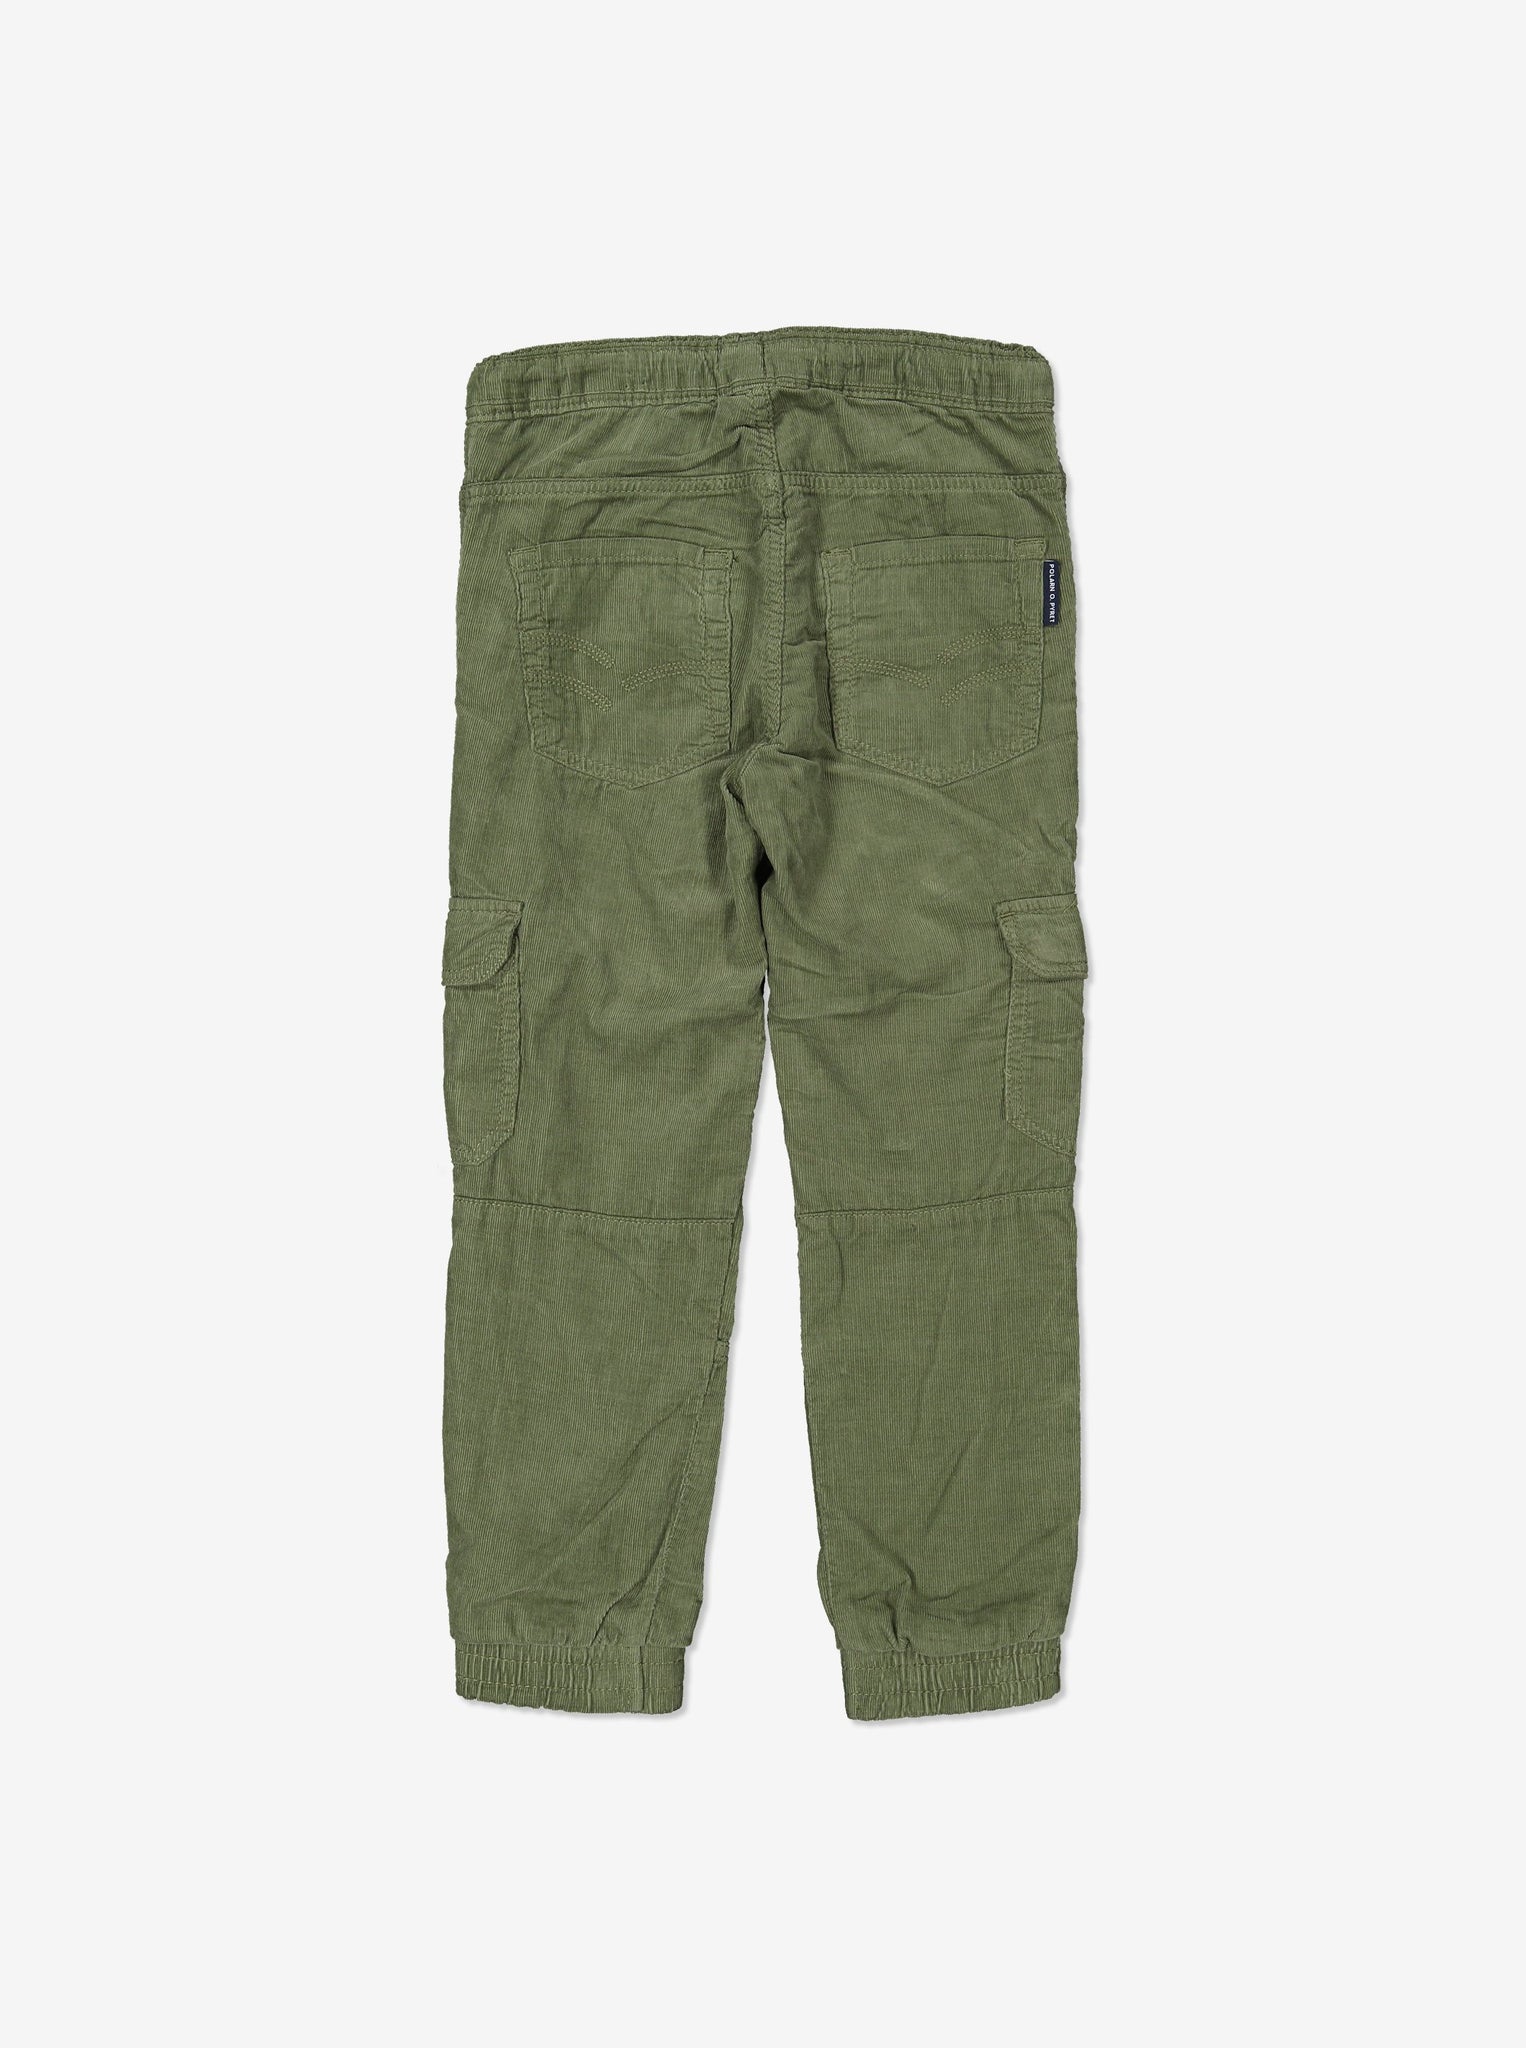 Unisex Green Corduroy Kids Cargo Trousers 1-6y